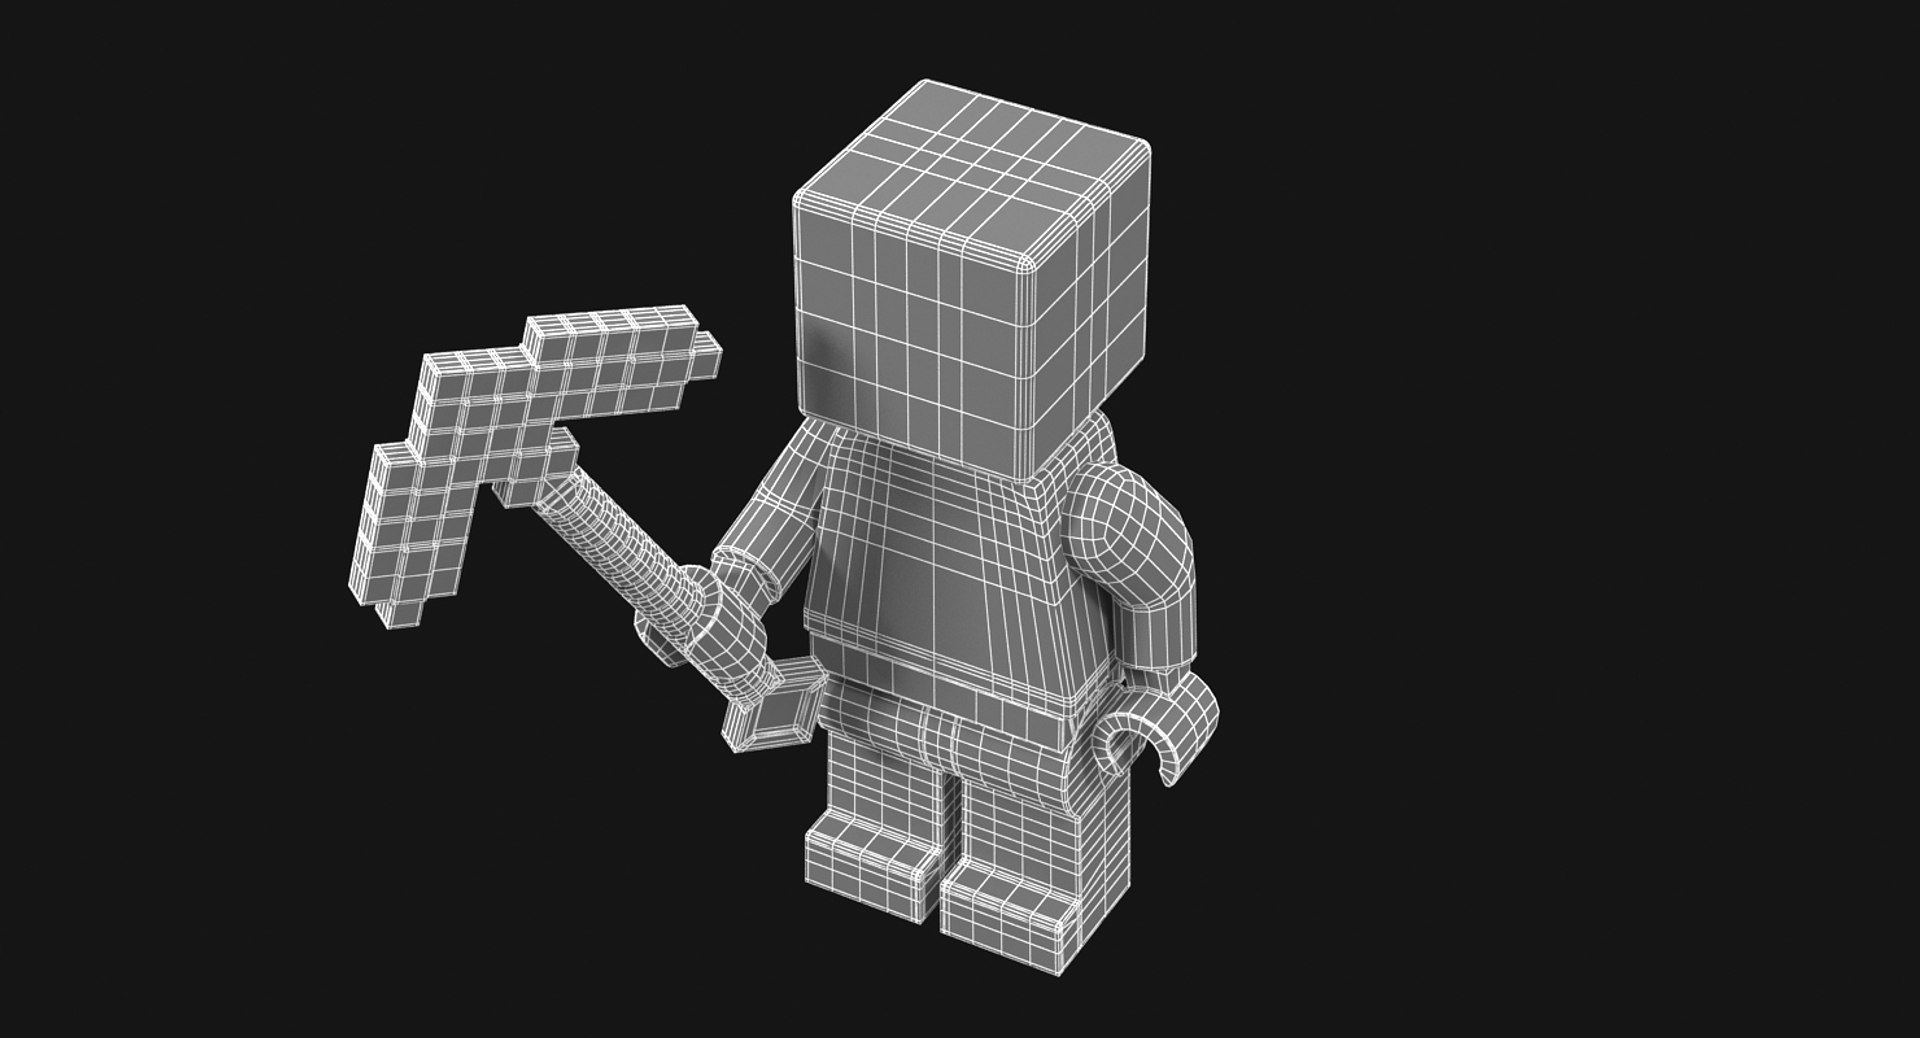 Lego minecraft steve model - TurboSquid 1181713